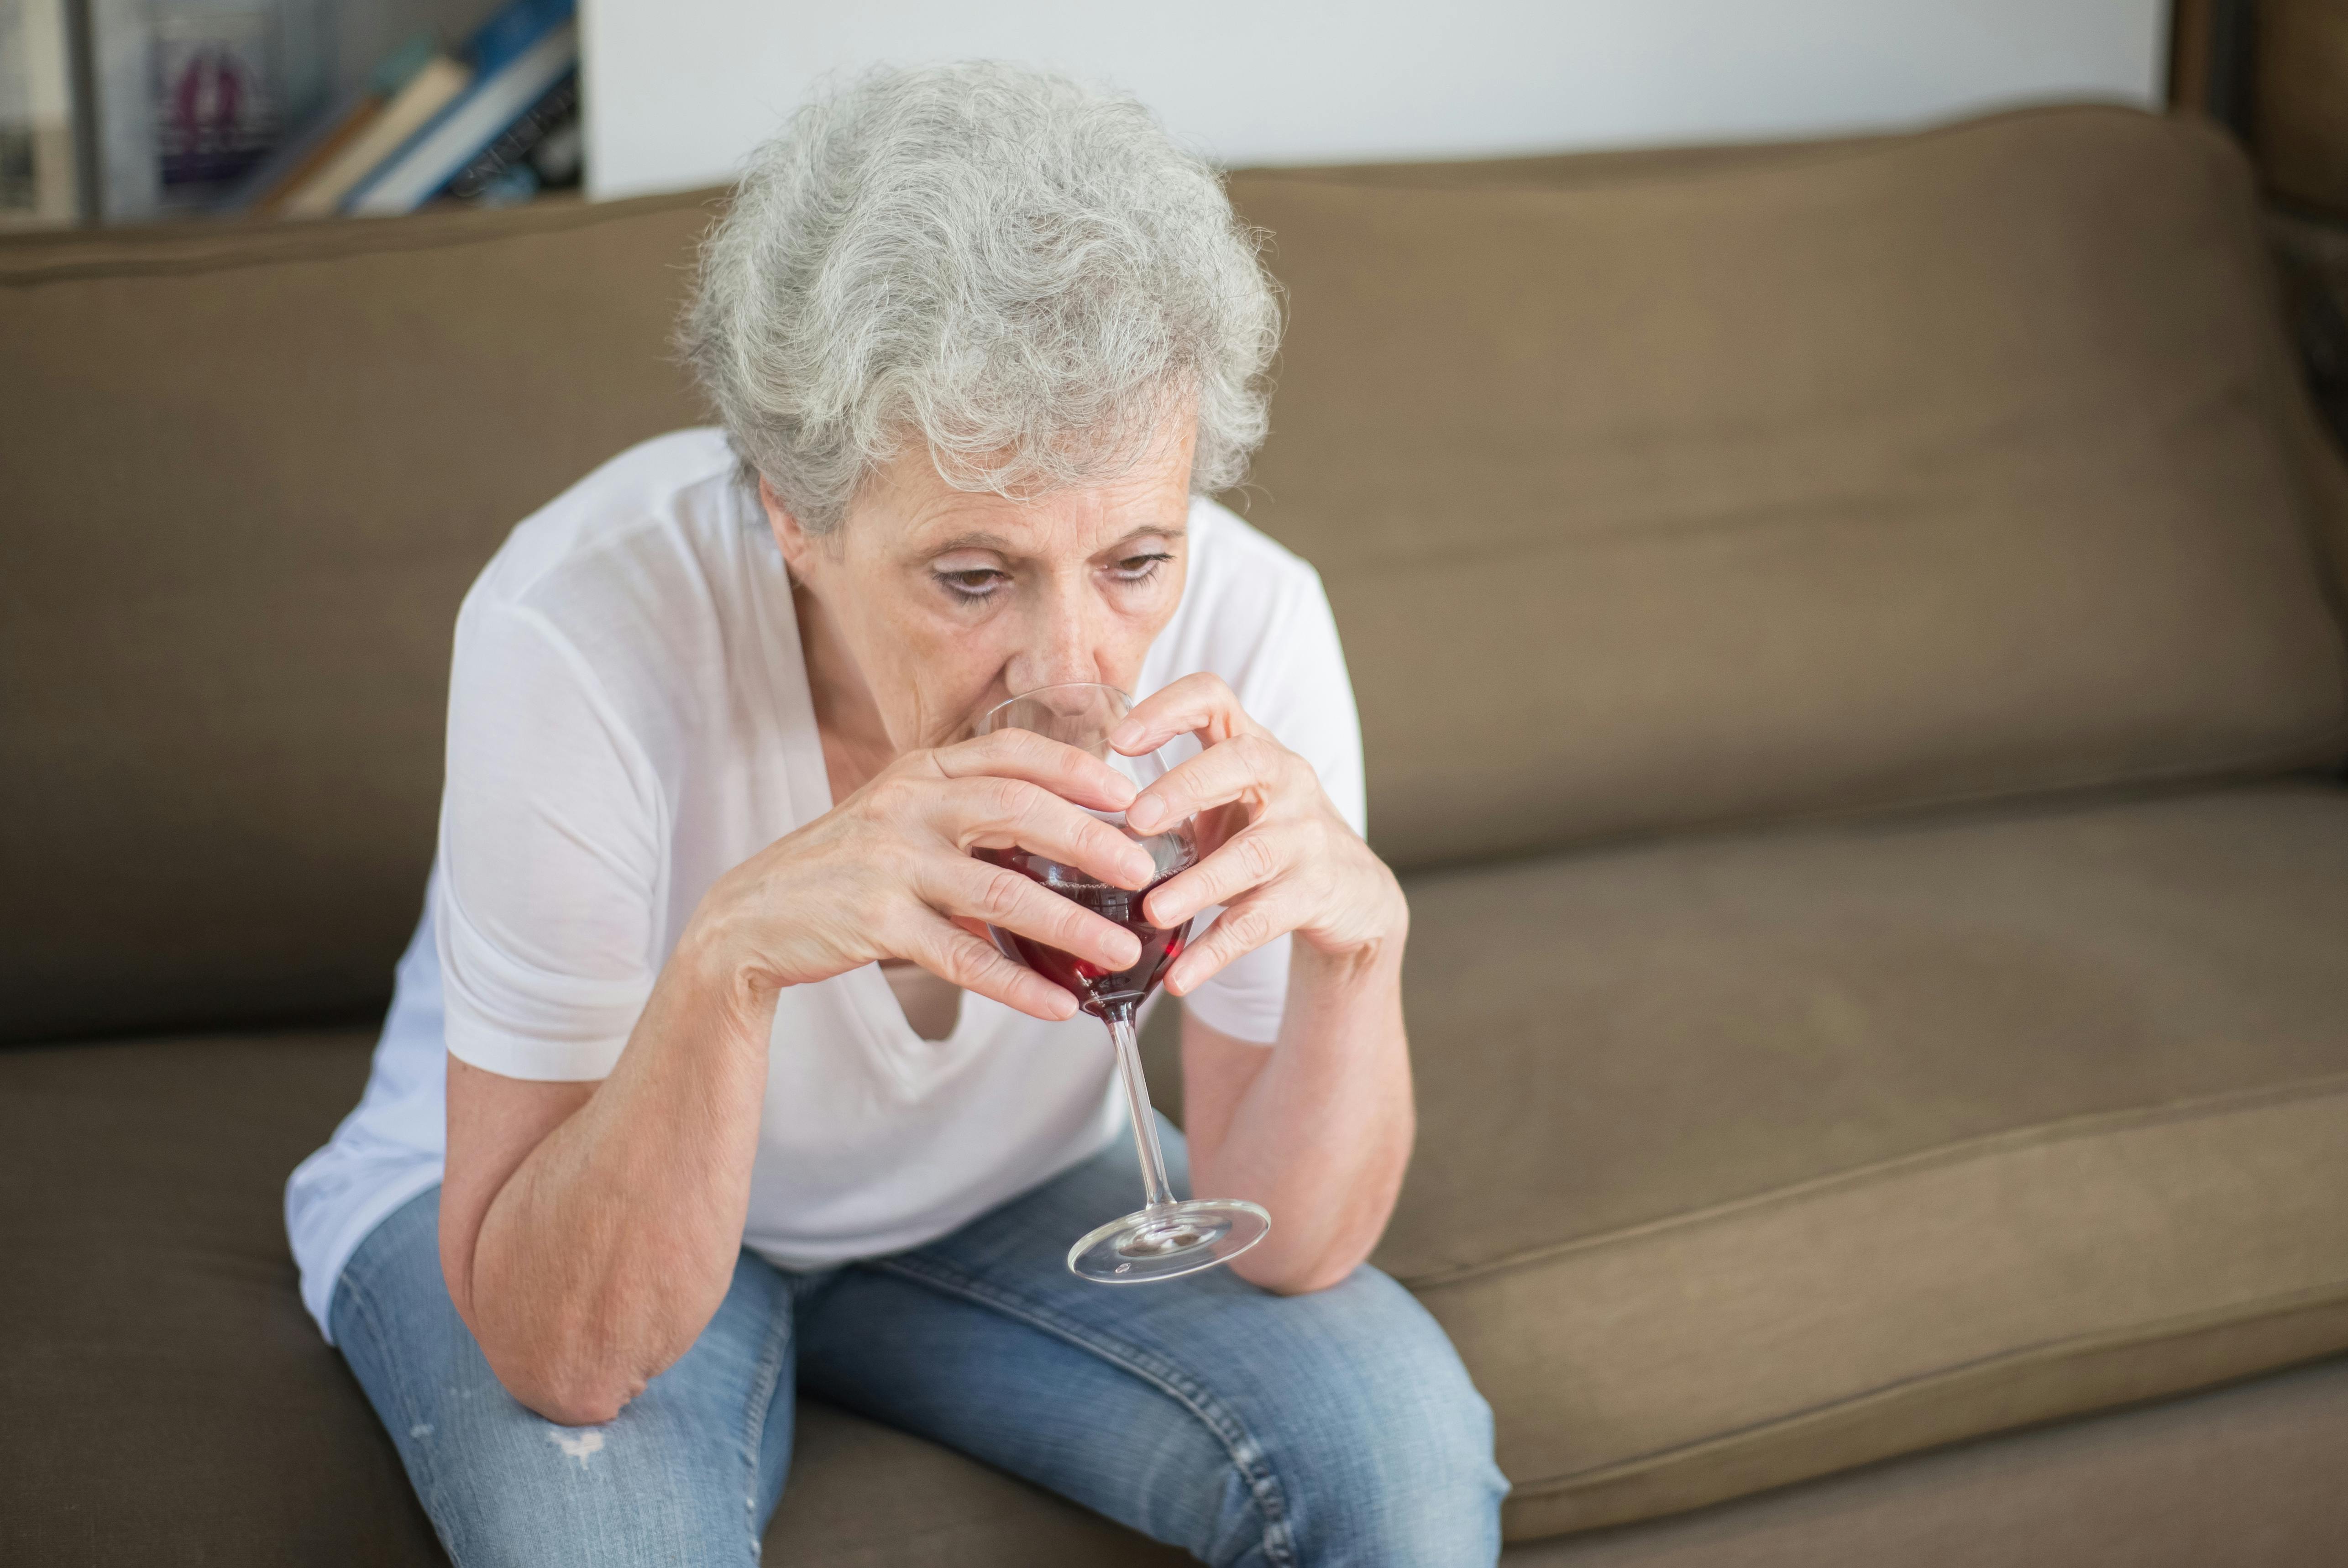 A sad woman drinking wine alone | Source: Pexels